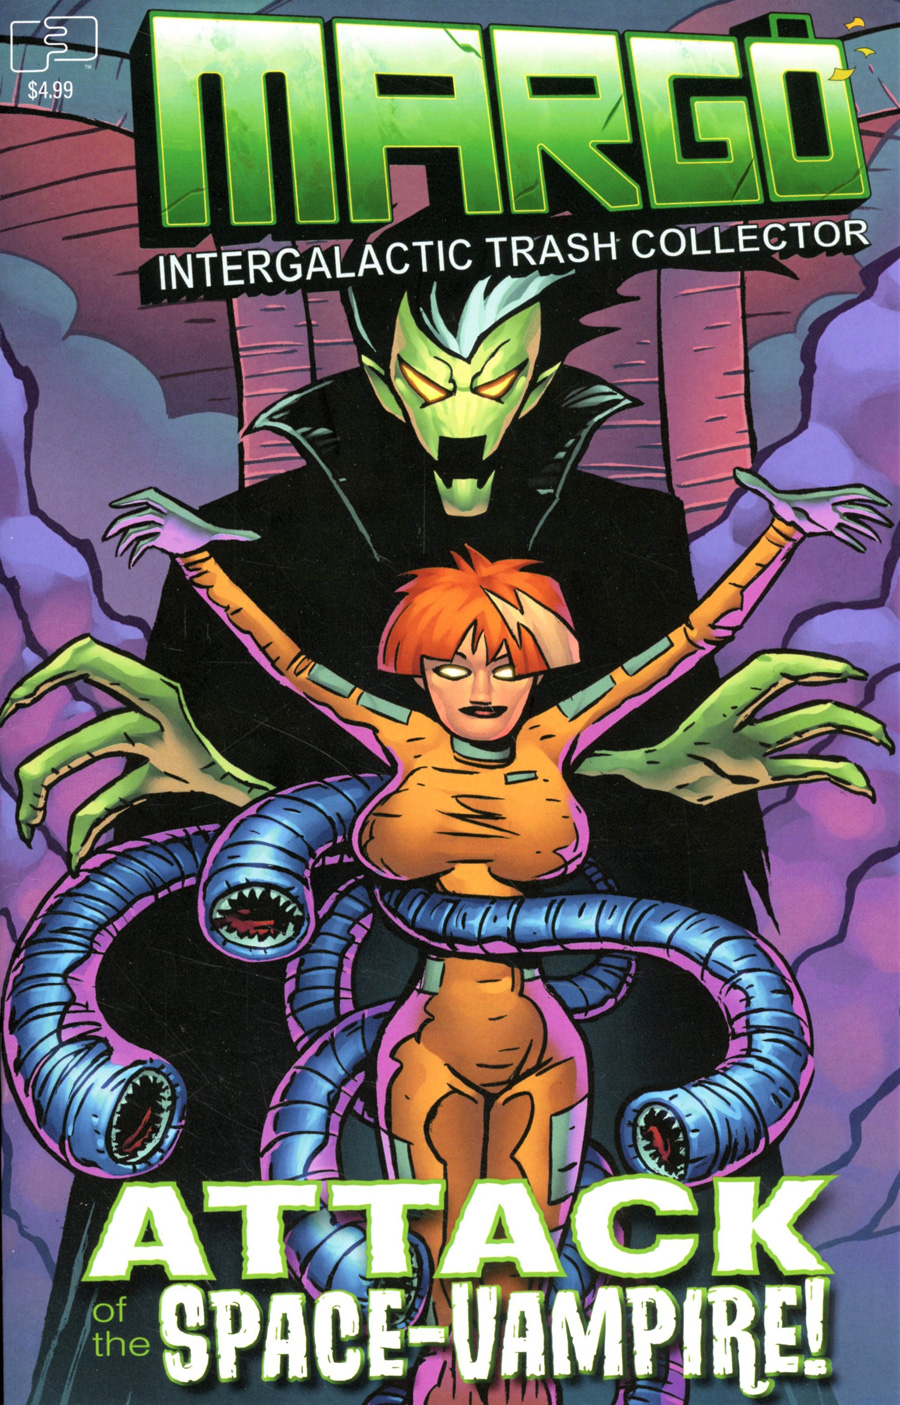 Margo: Intergalactic Trash Collector - Attack of the Space Vampire #1 (2020)